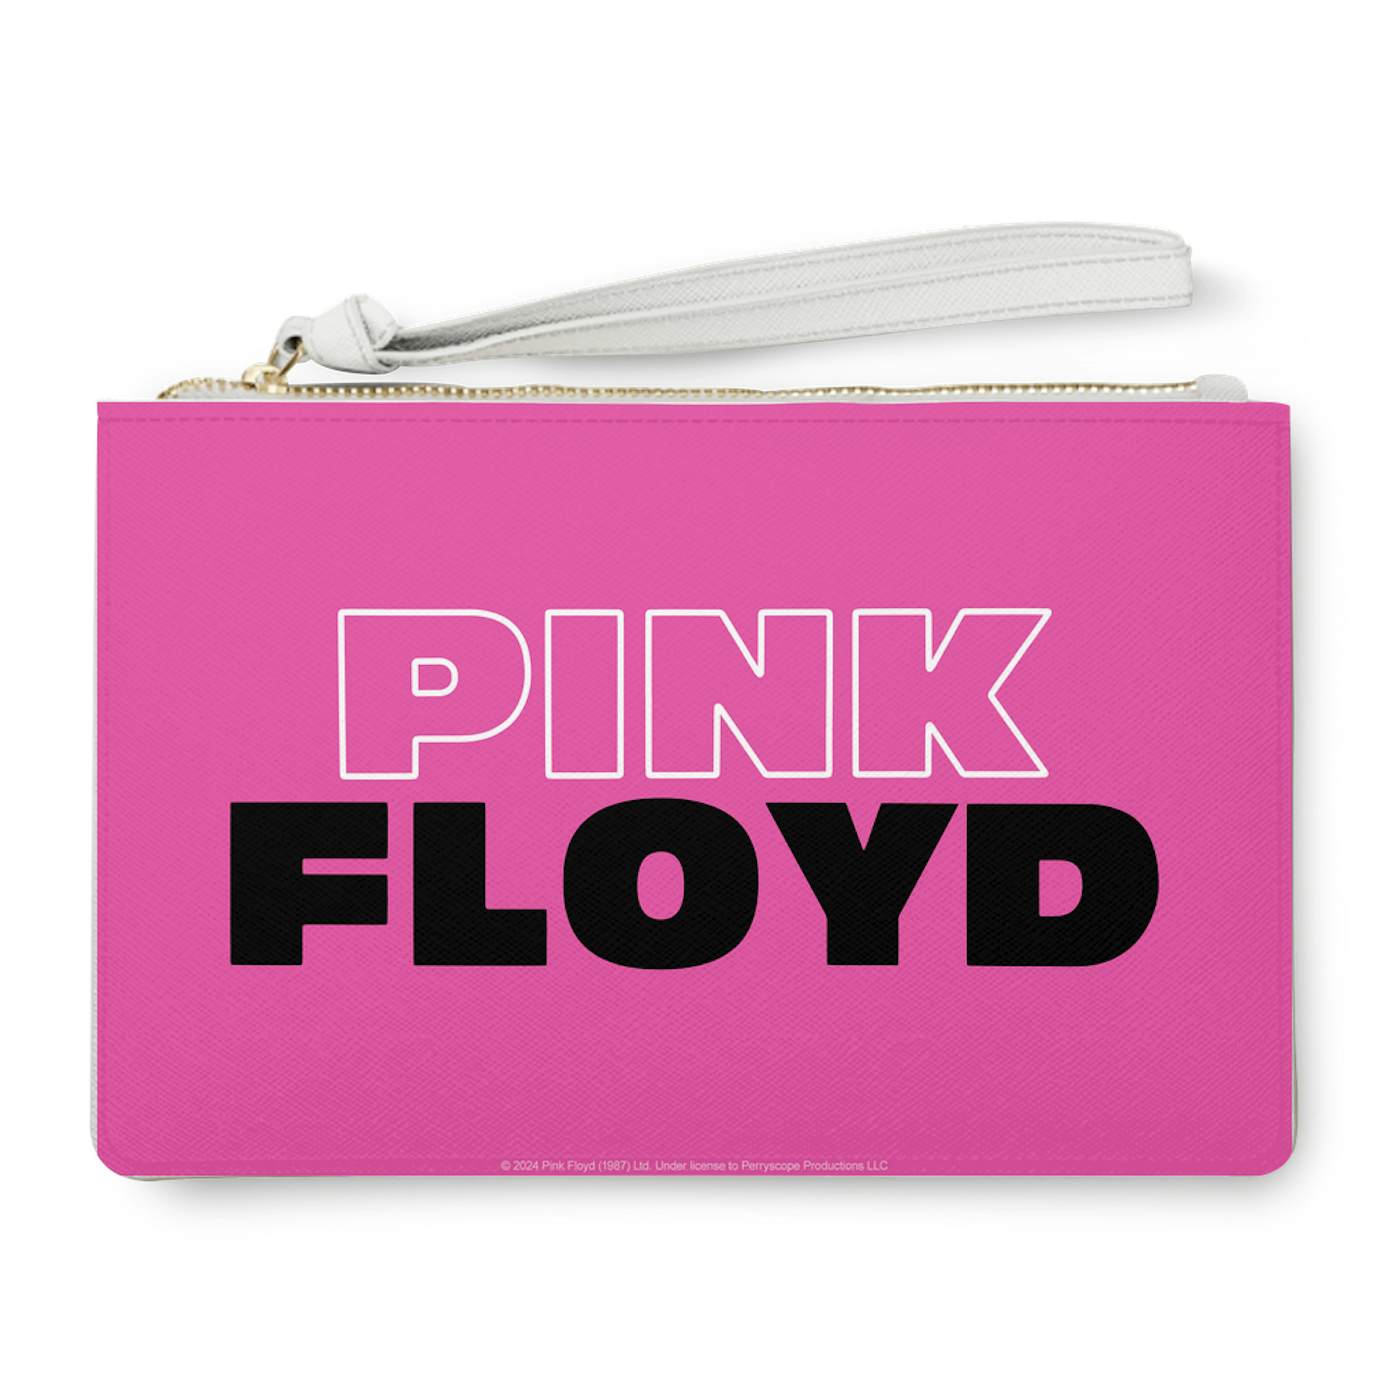 Pink Floyd Clutch | Pink Floyd Logo Reverse (Merchbar Exclusive) Pink Floyd Clutch Bag